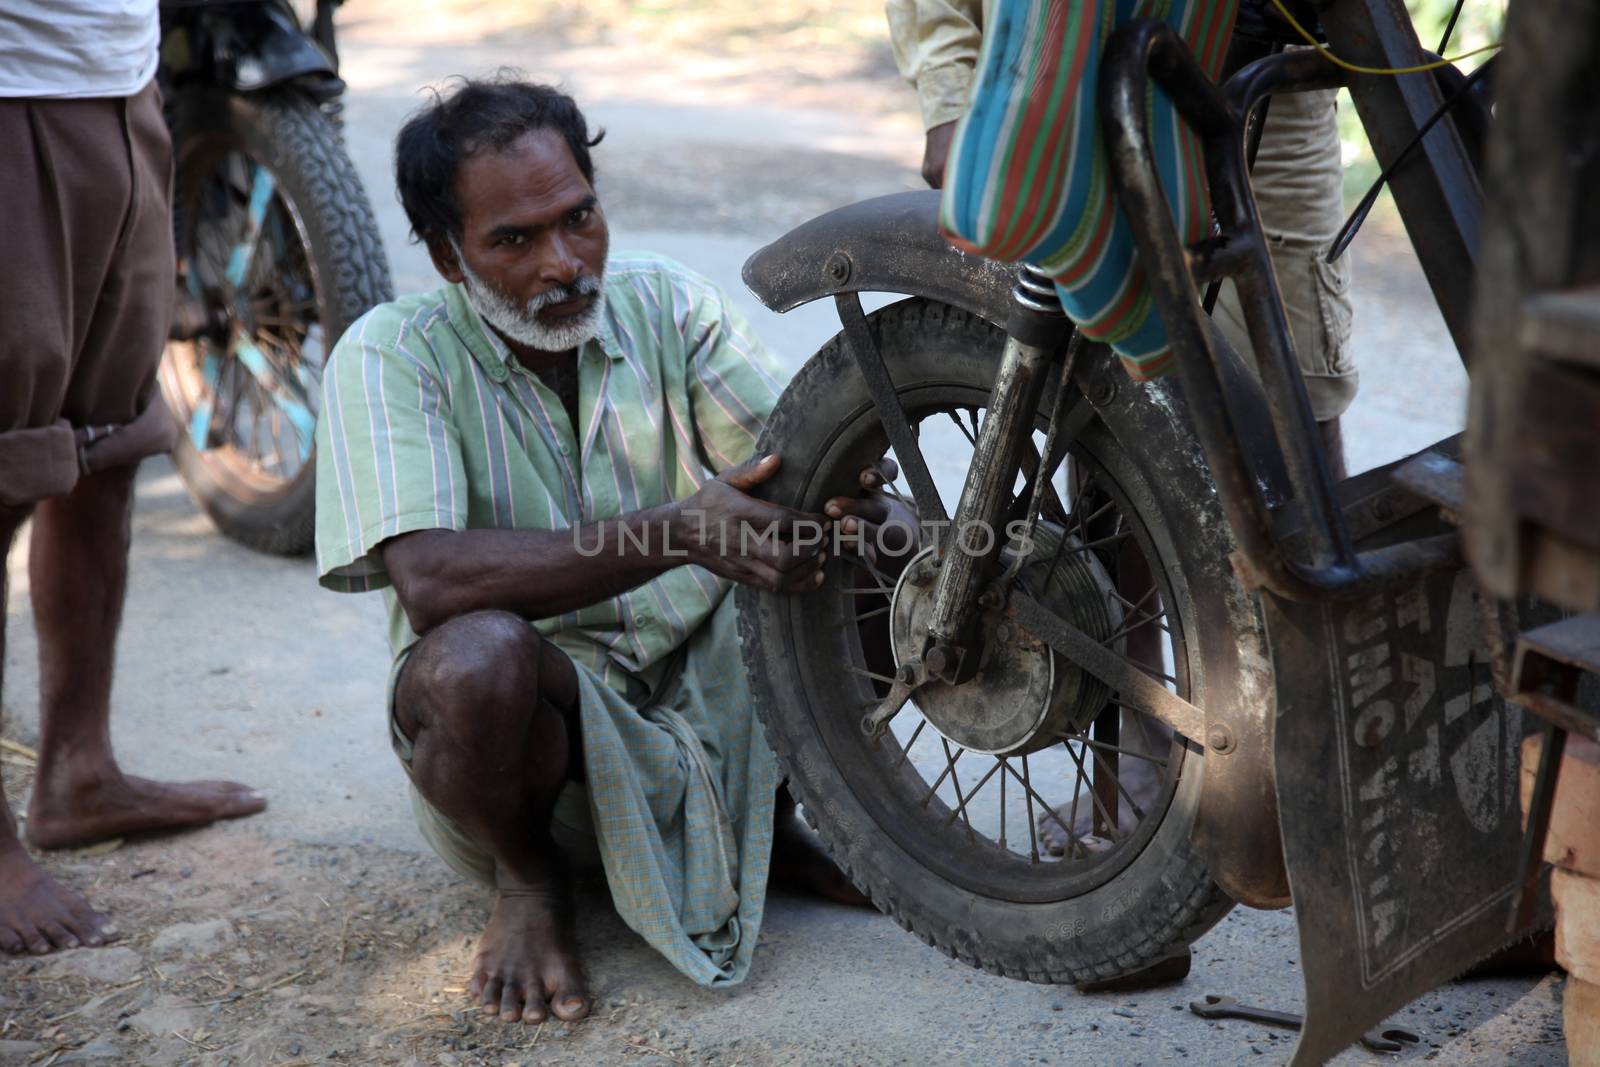 Mechanic repair the motorbike. Bikes is the common individual transport in India.